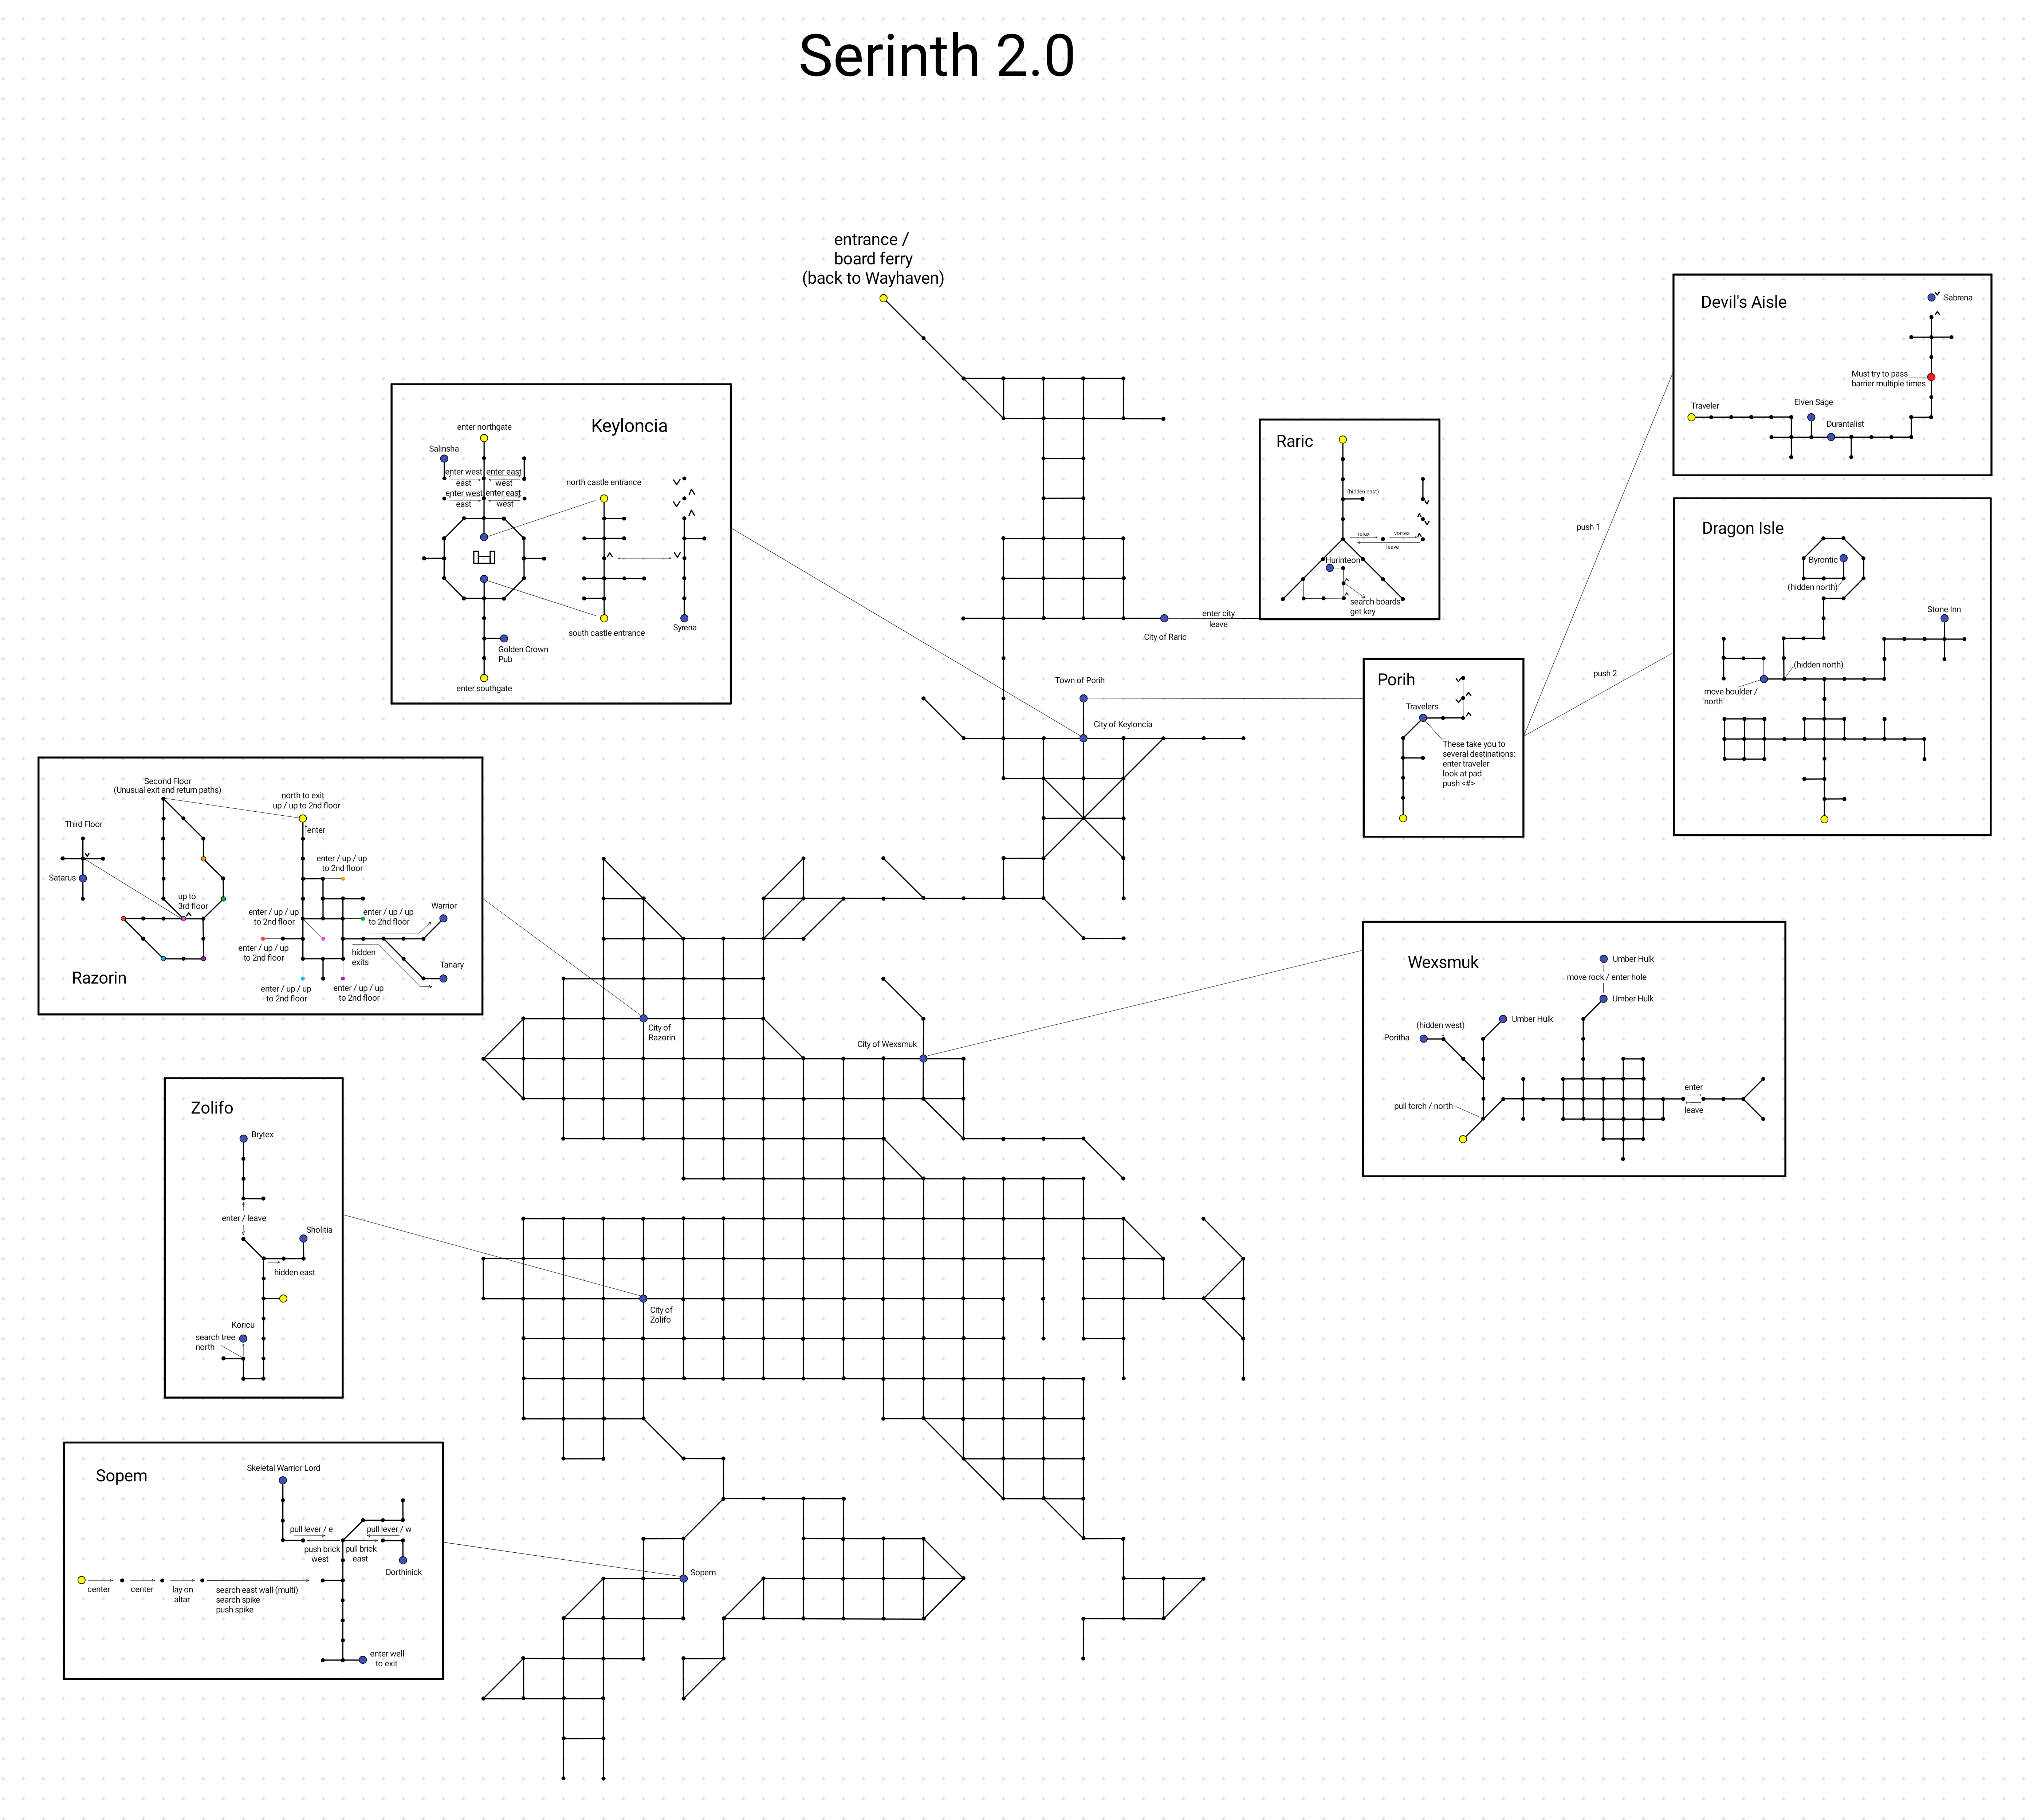 Map of Serinth 2.0